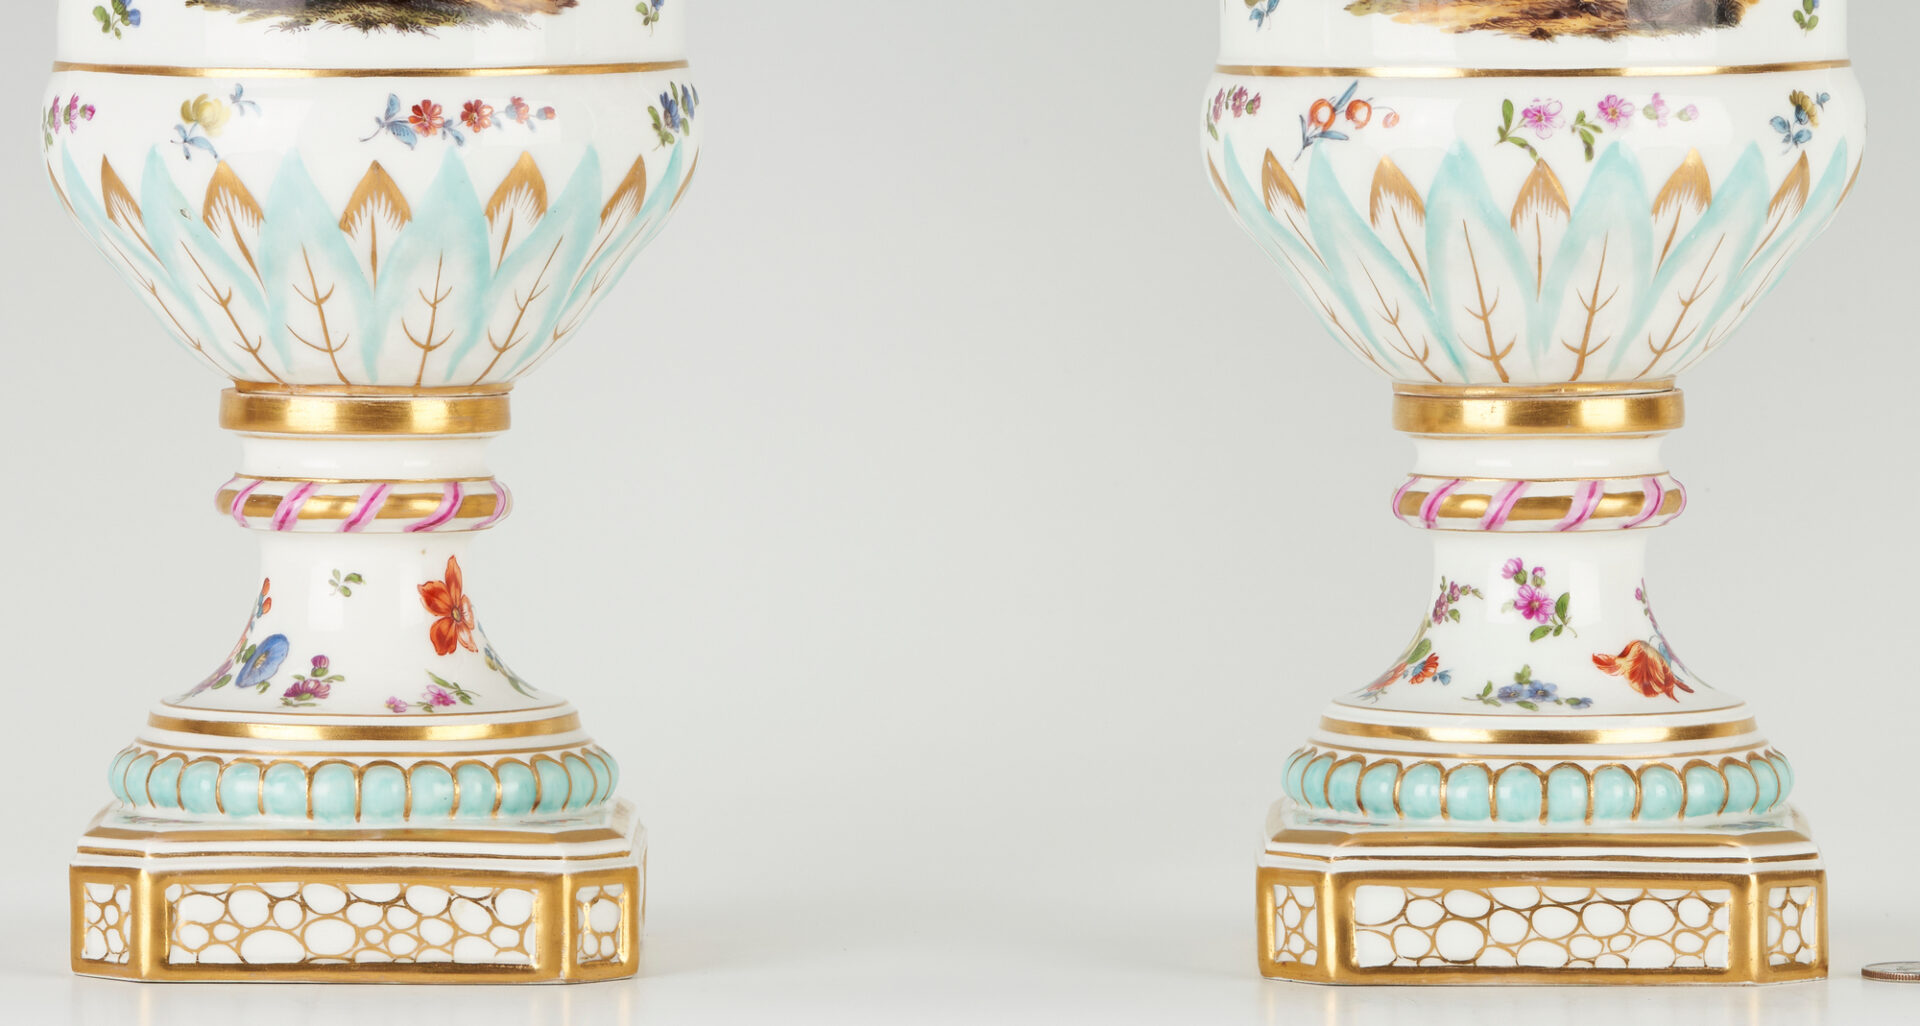 Lot 281: Pr. Large KPM Neoclassical Porcelain Covered Urns, Battle Scenes